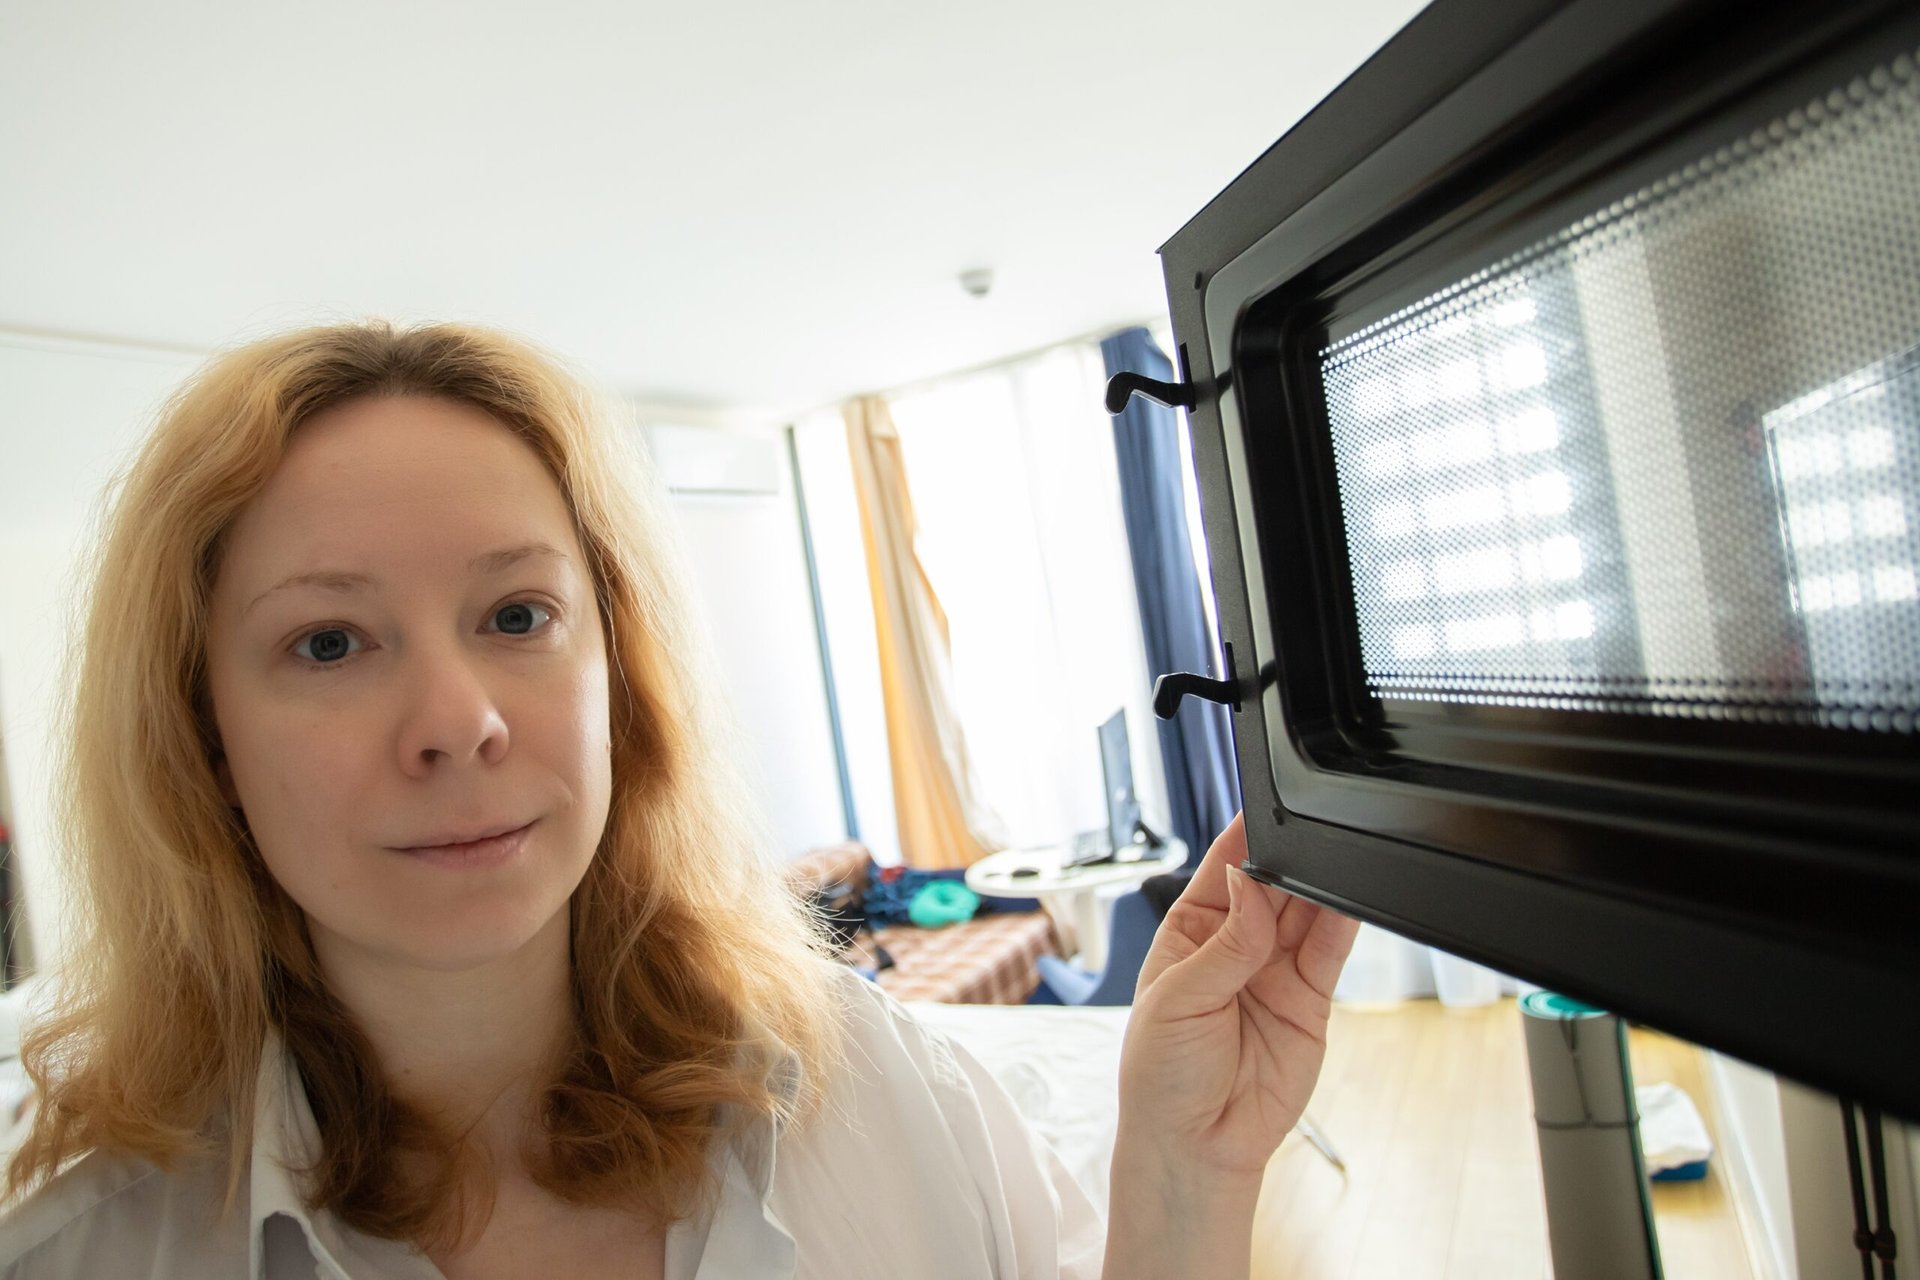 Woman opening a microwave door